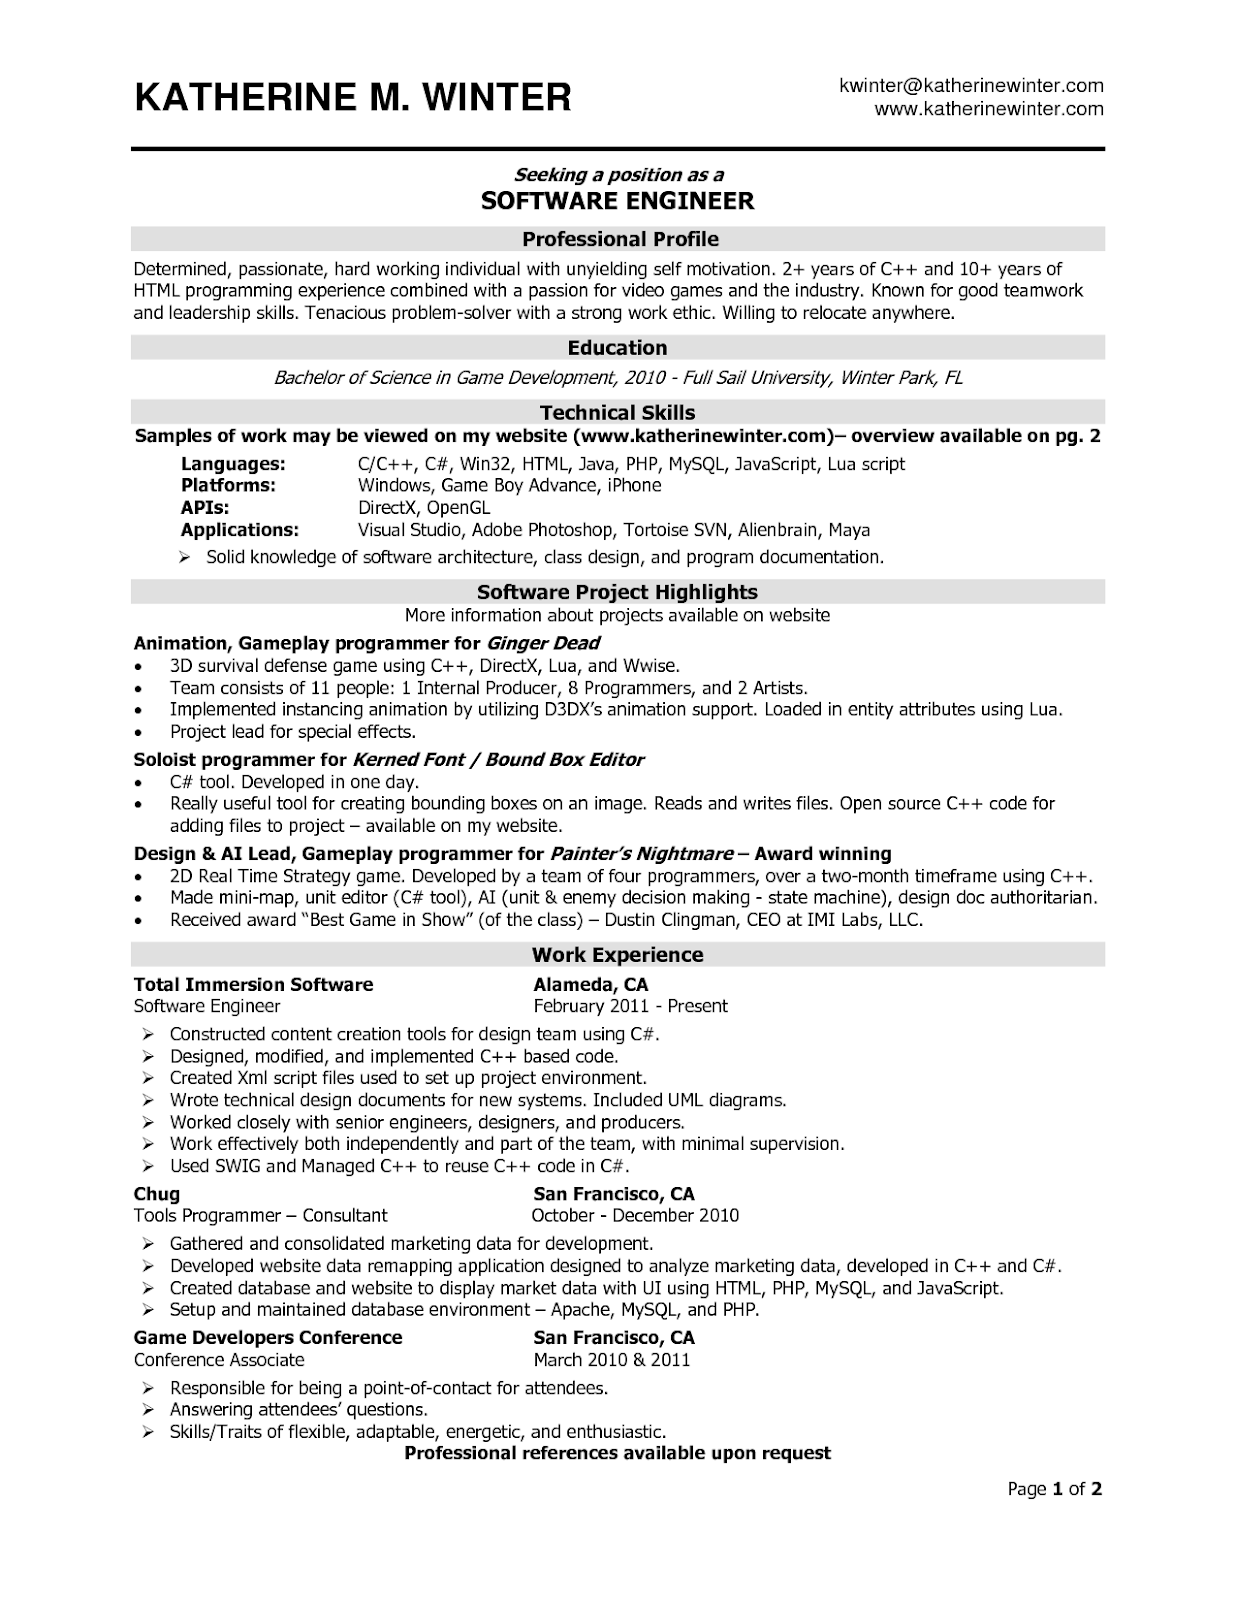 Sample resume for rf engineer